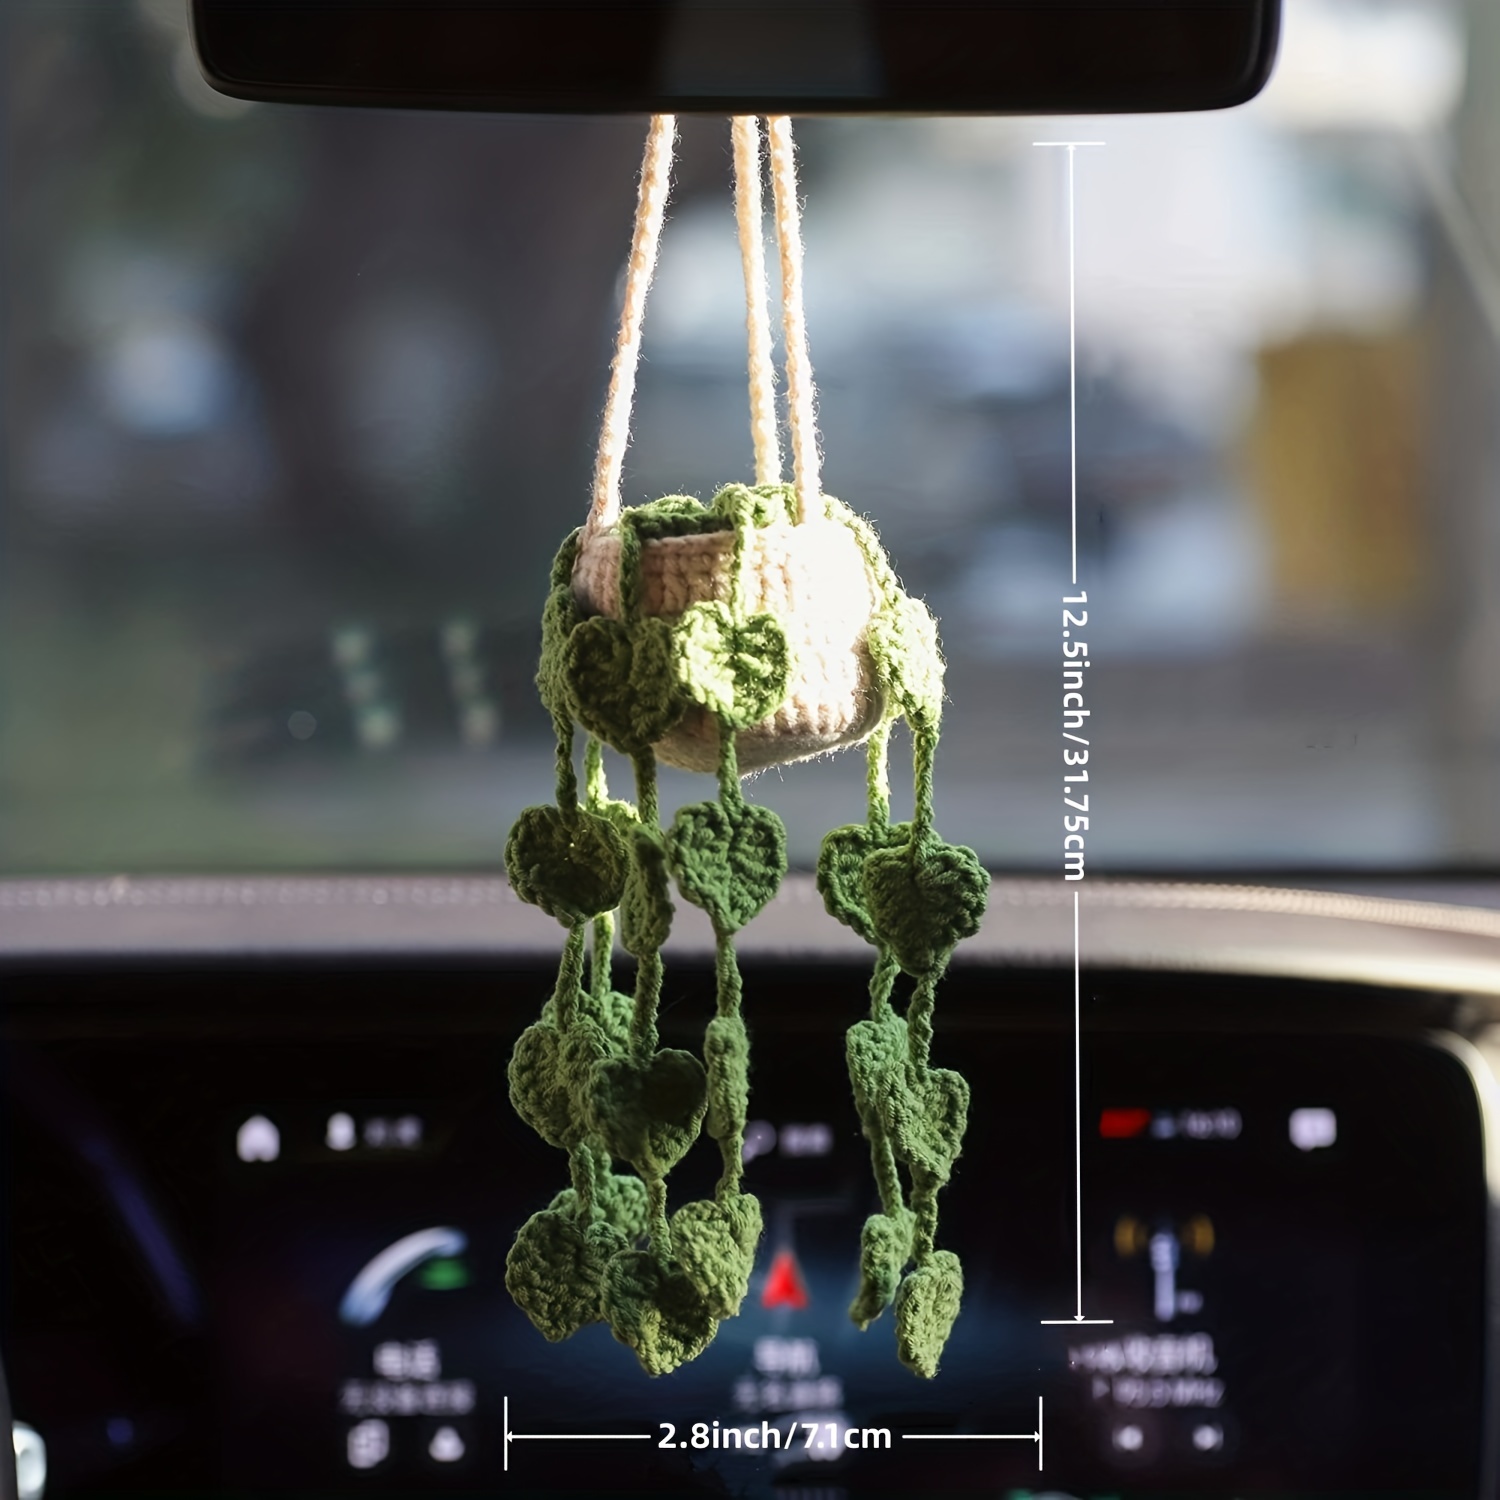 Car Mirror Hanging Basket Plant – MADE BY TUS